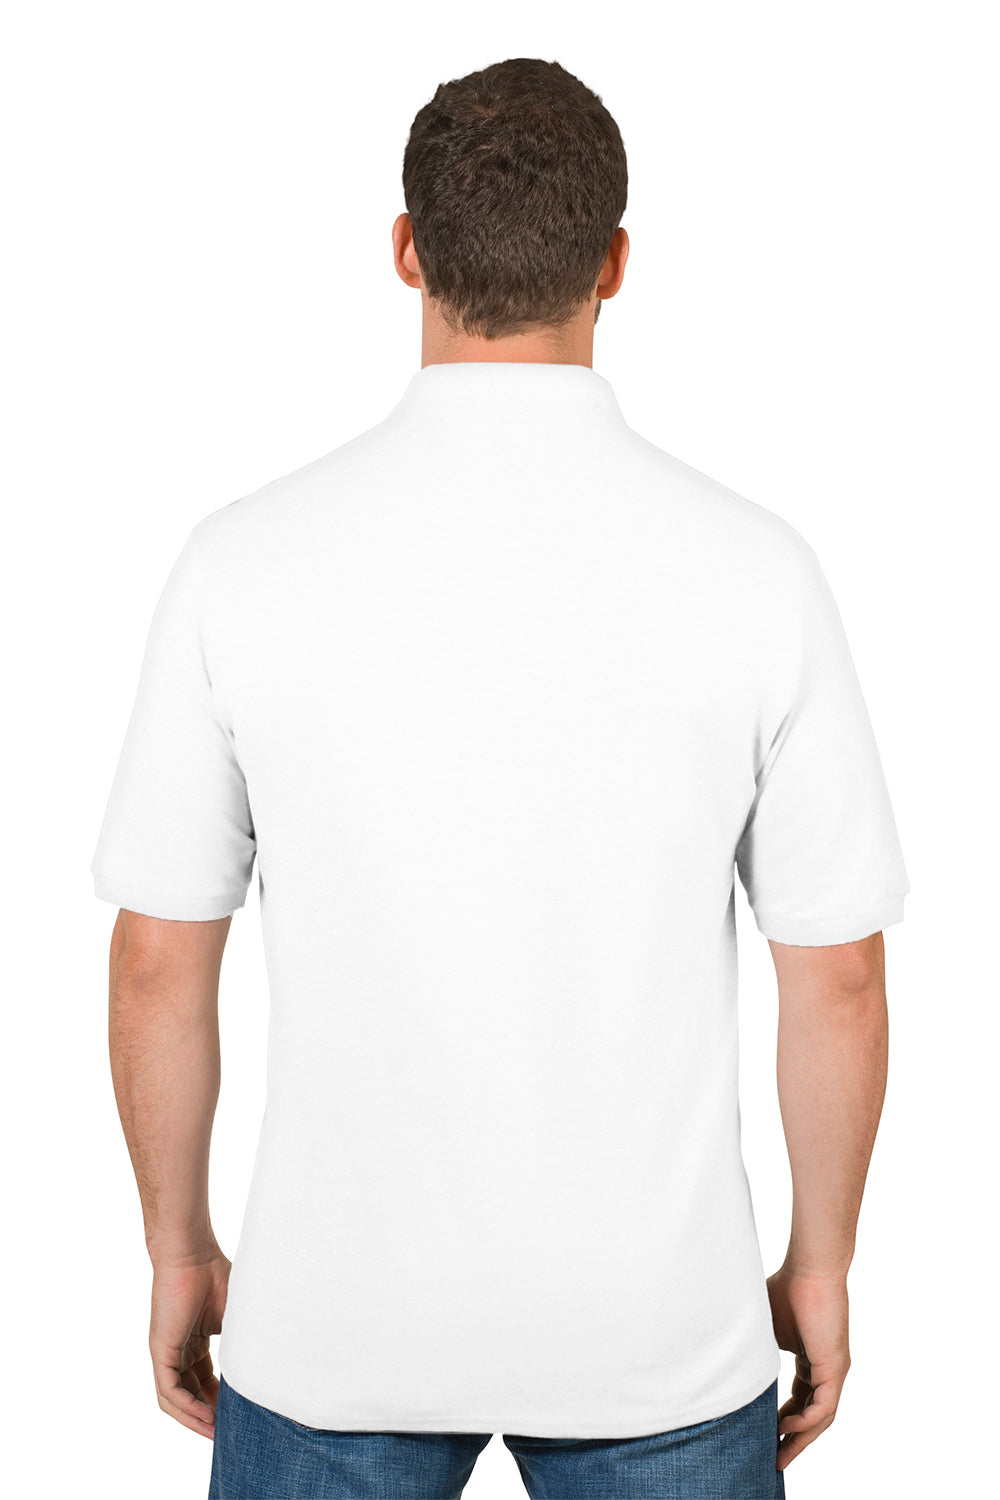 Jerzees 443MR Mens Short Sleeve Polo Shirt White Back